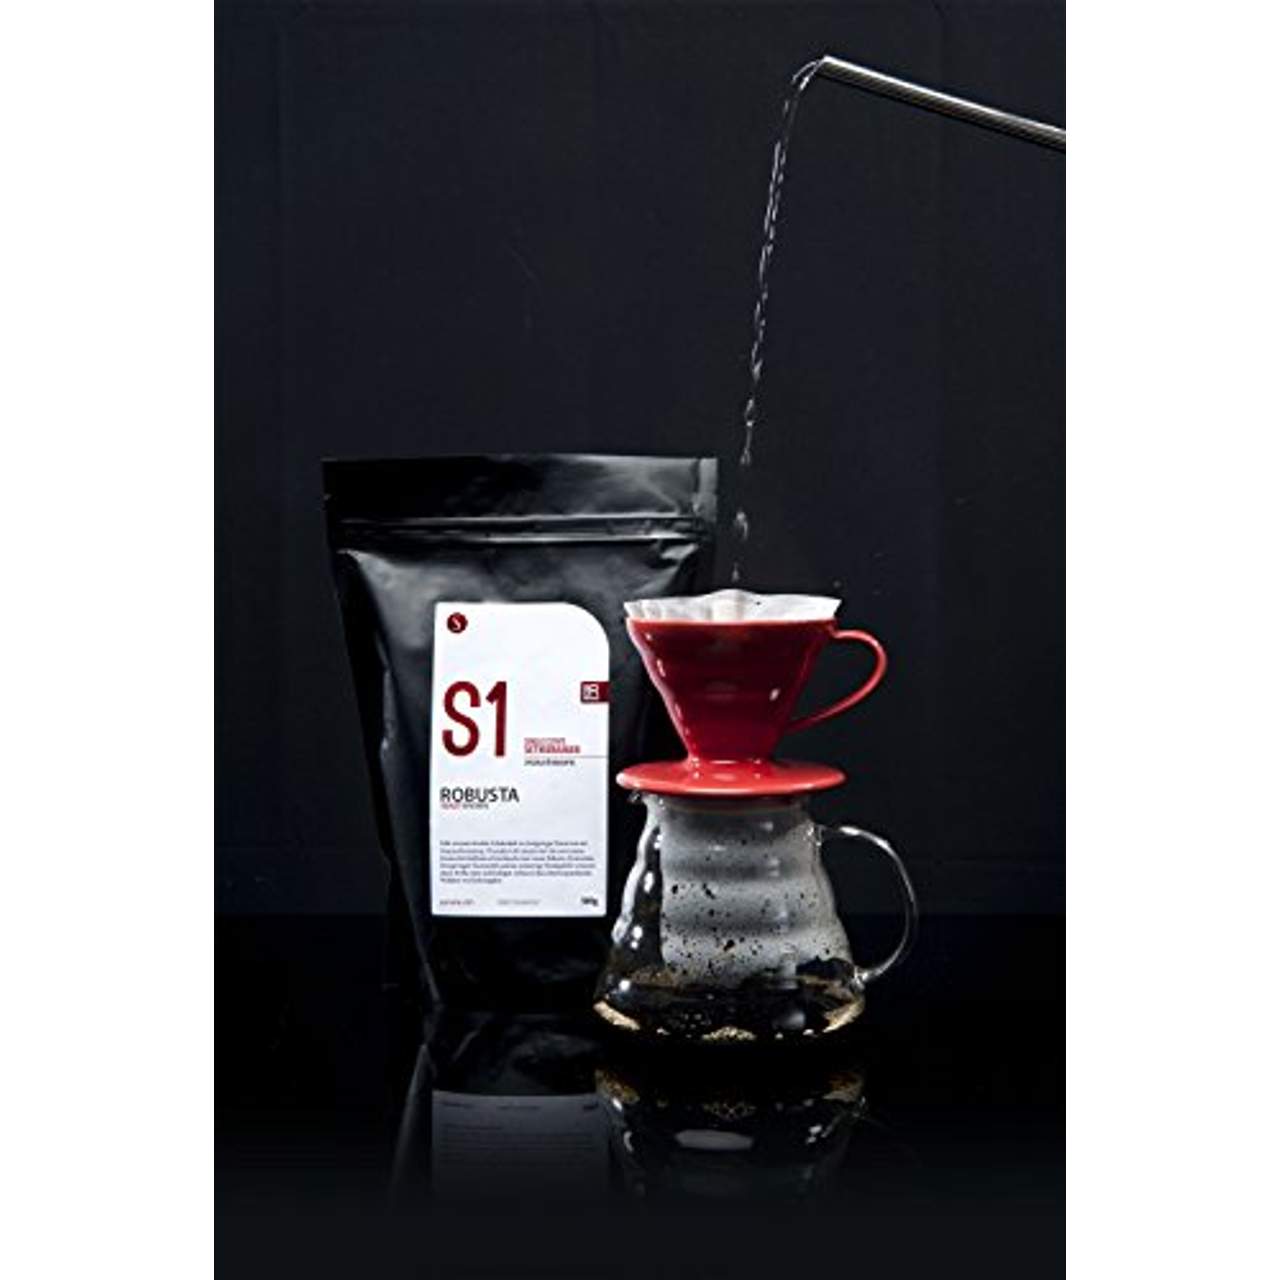 Sonsana S1 100% Premium Robusta Kaffee